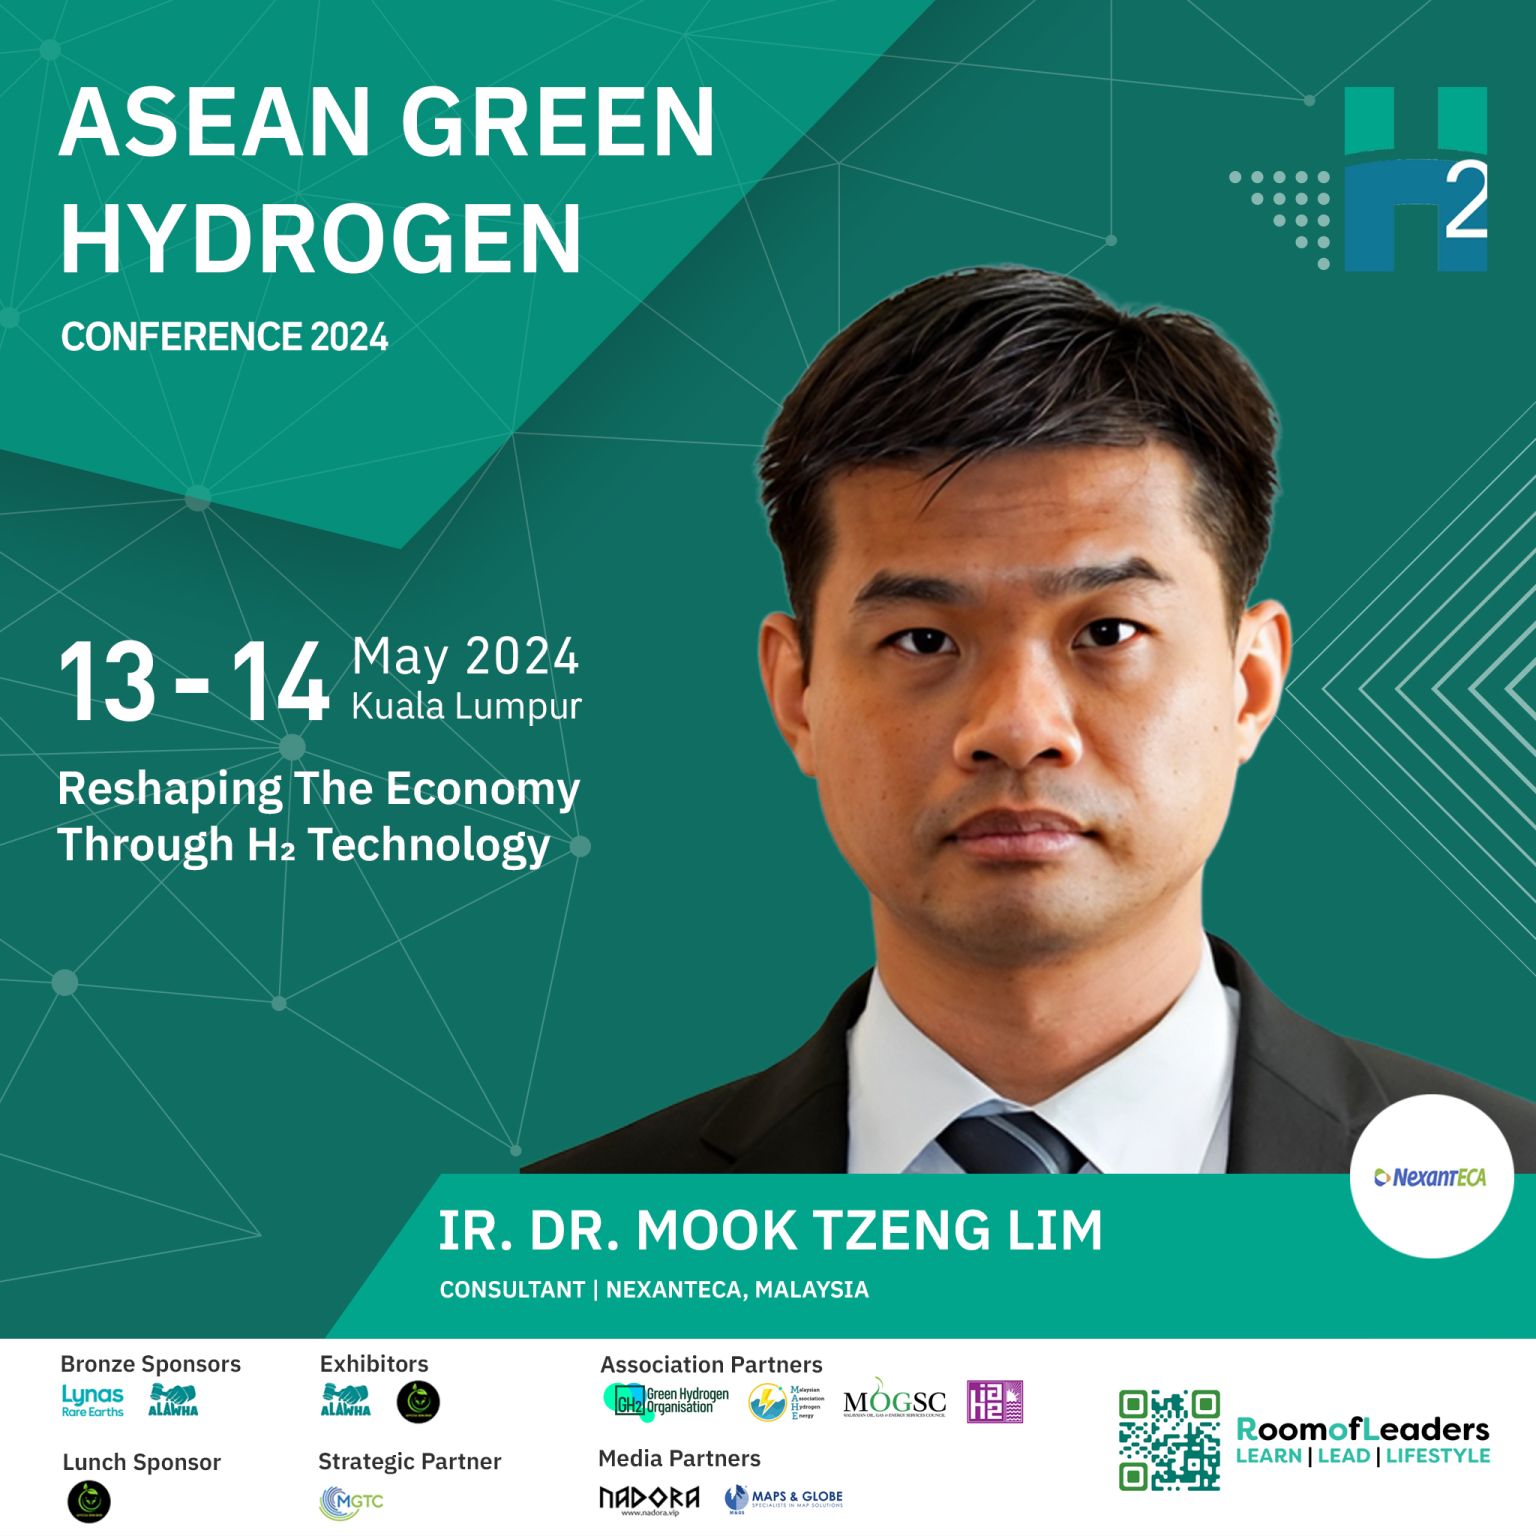 Asean Green Hydrogen Conference 2024, Kuala Lumpur